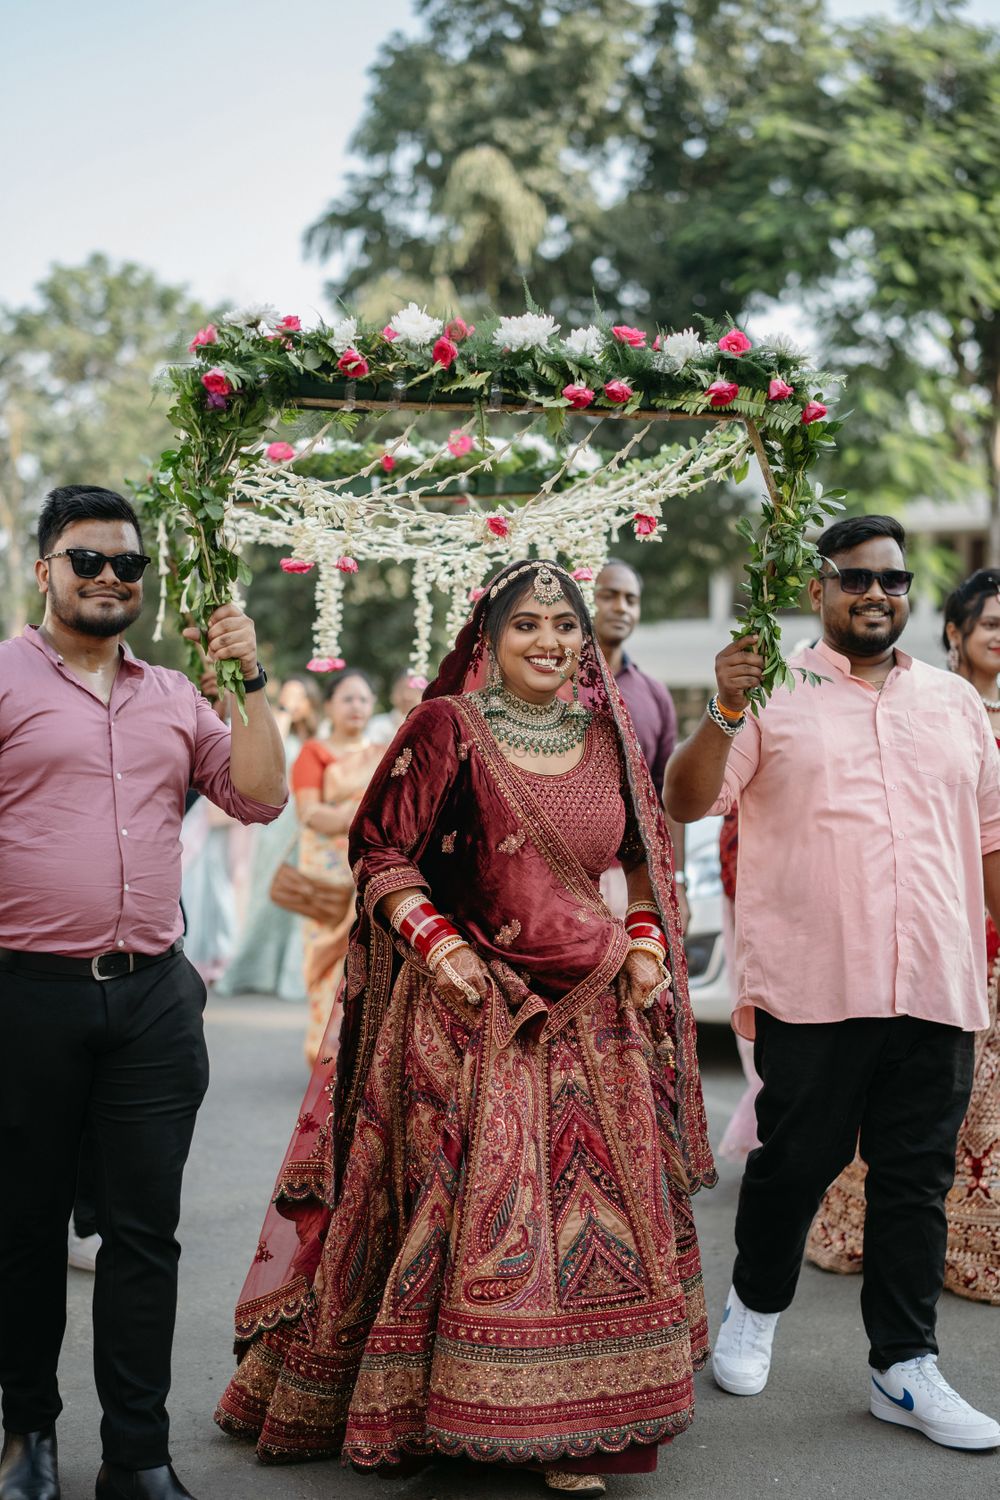 Photo By Weddings by Shivam - Photographers